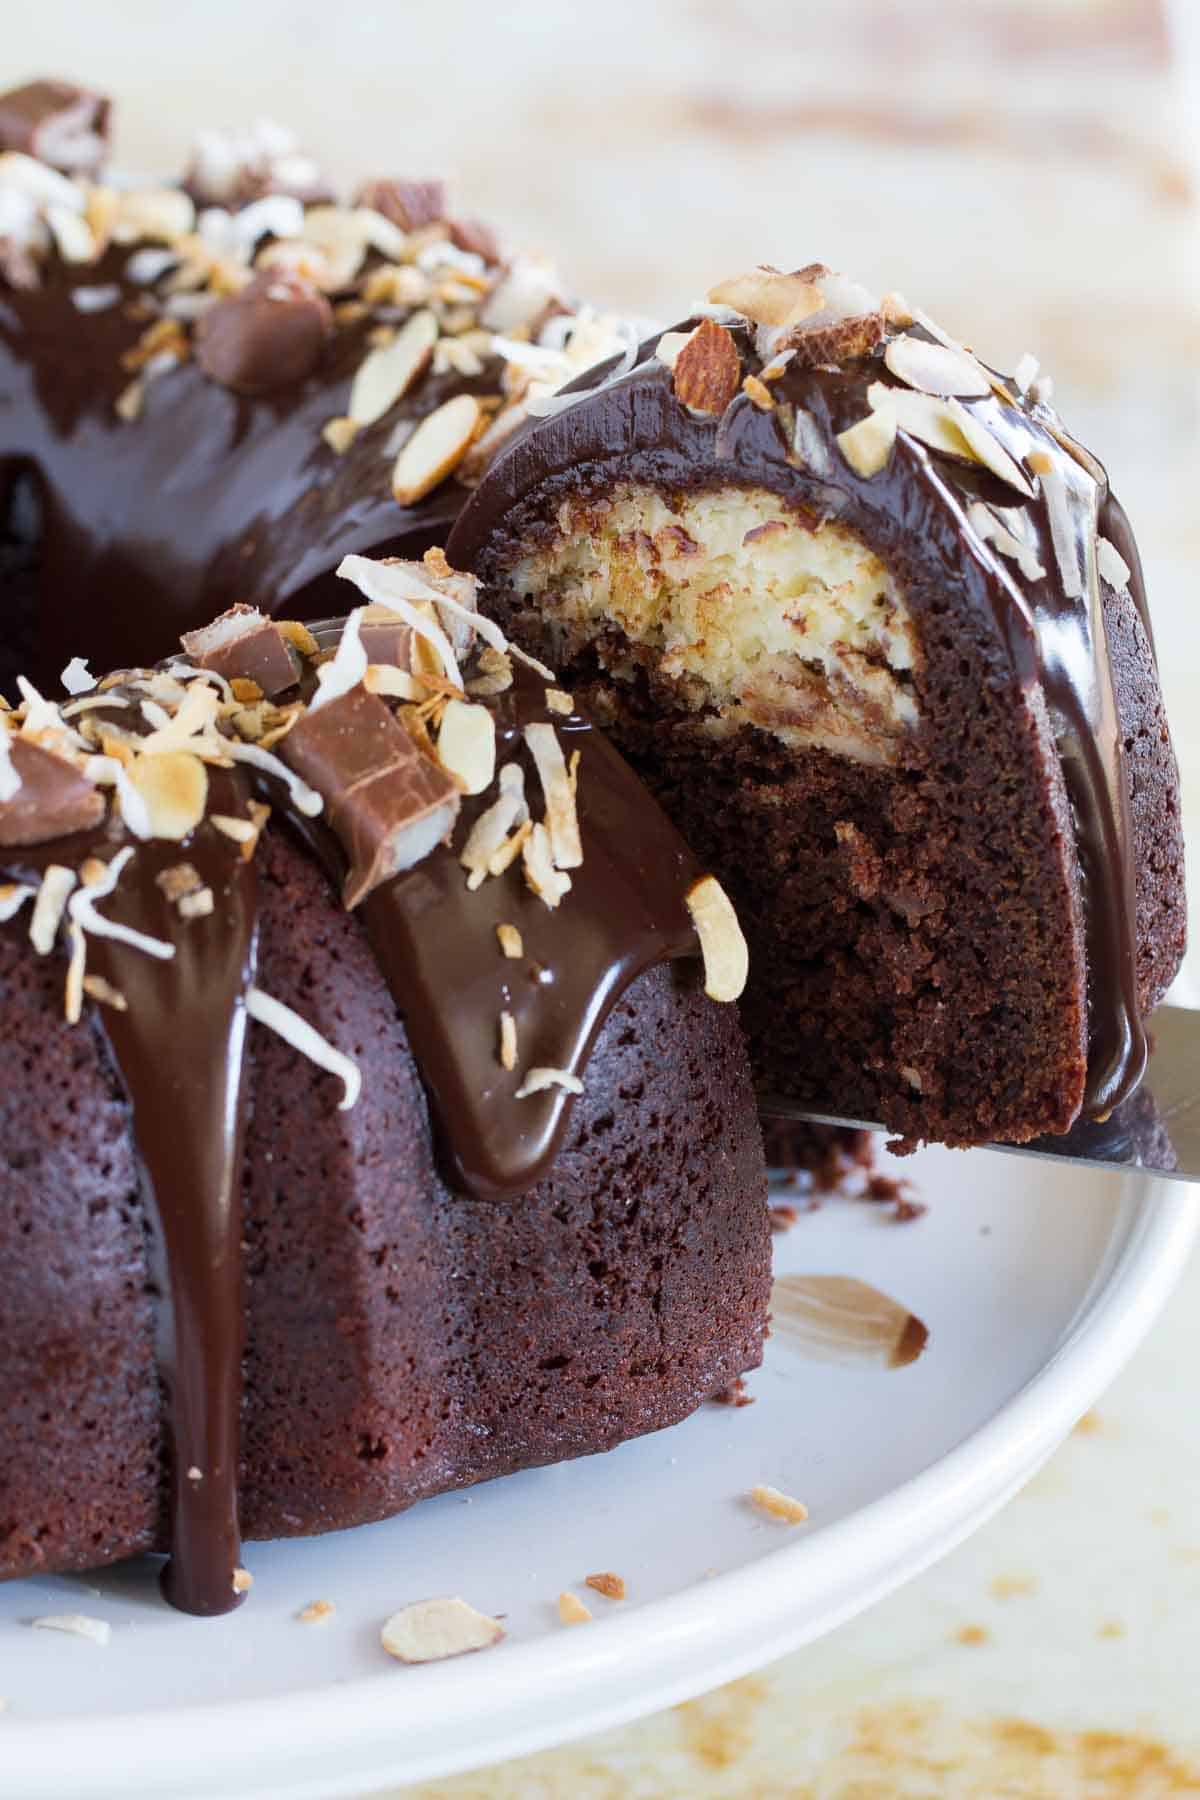 https://www.tasteandtellblog.com/wp-content/uploads/2016/10/Almond-Joy-Filled-Chocolate-Bundt-Cake-tasteandtellblog.com-1-lr.jpg